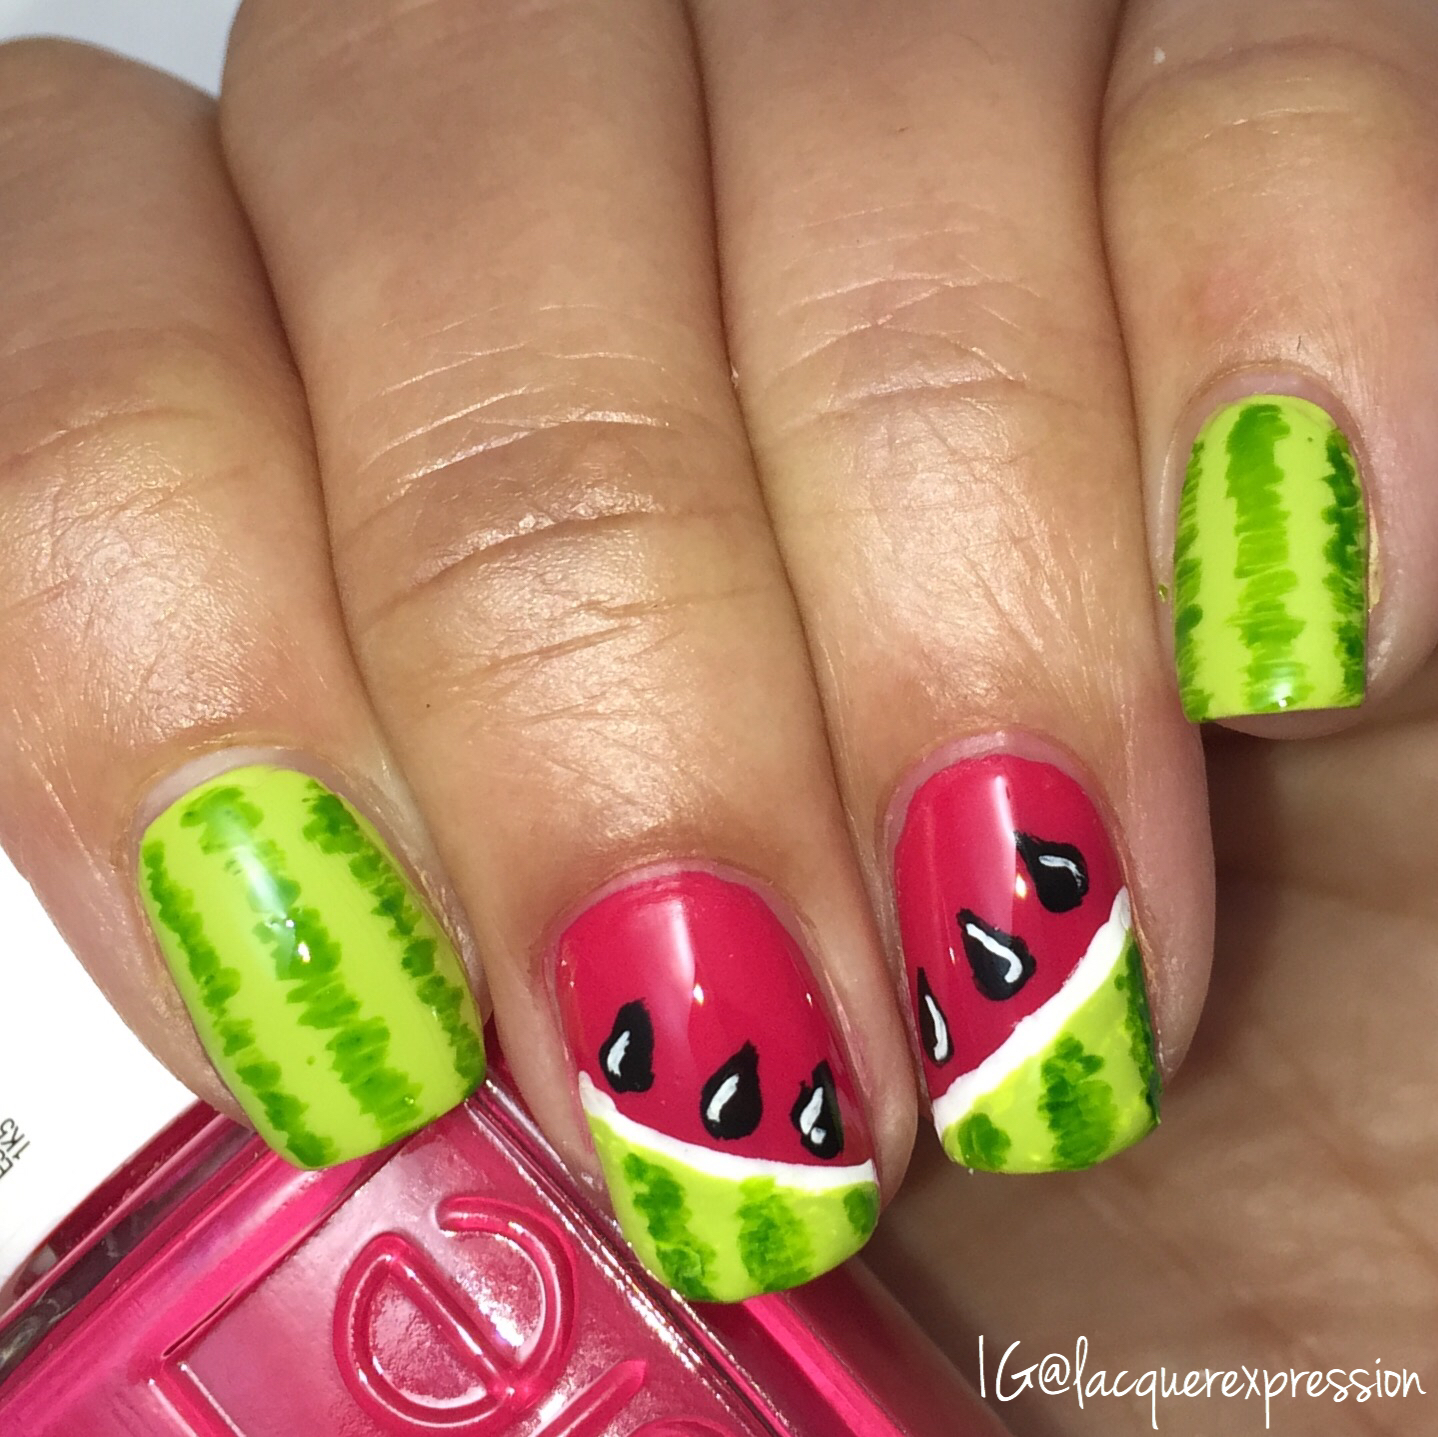 Nail Art - Watermelon Nails - LacquerExpression